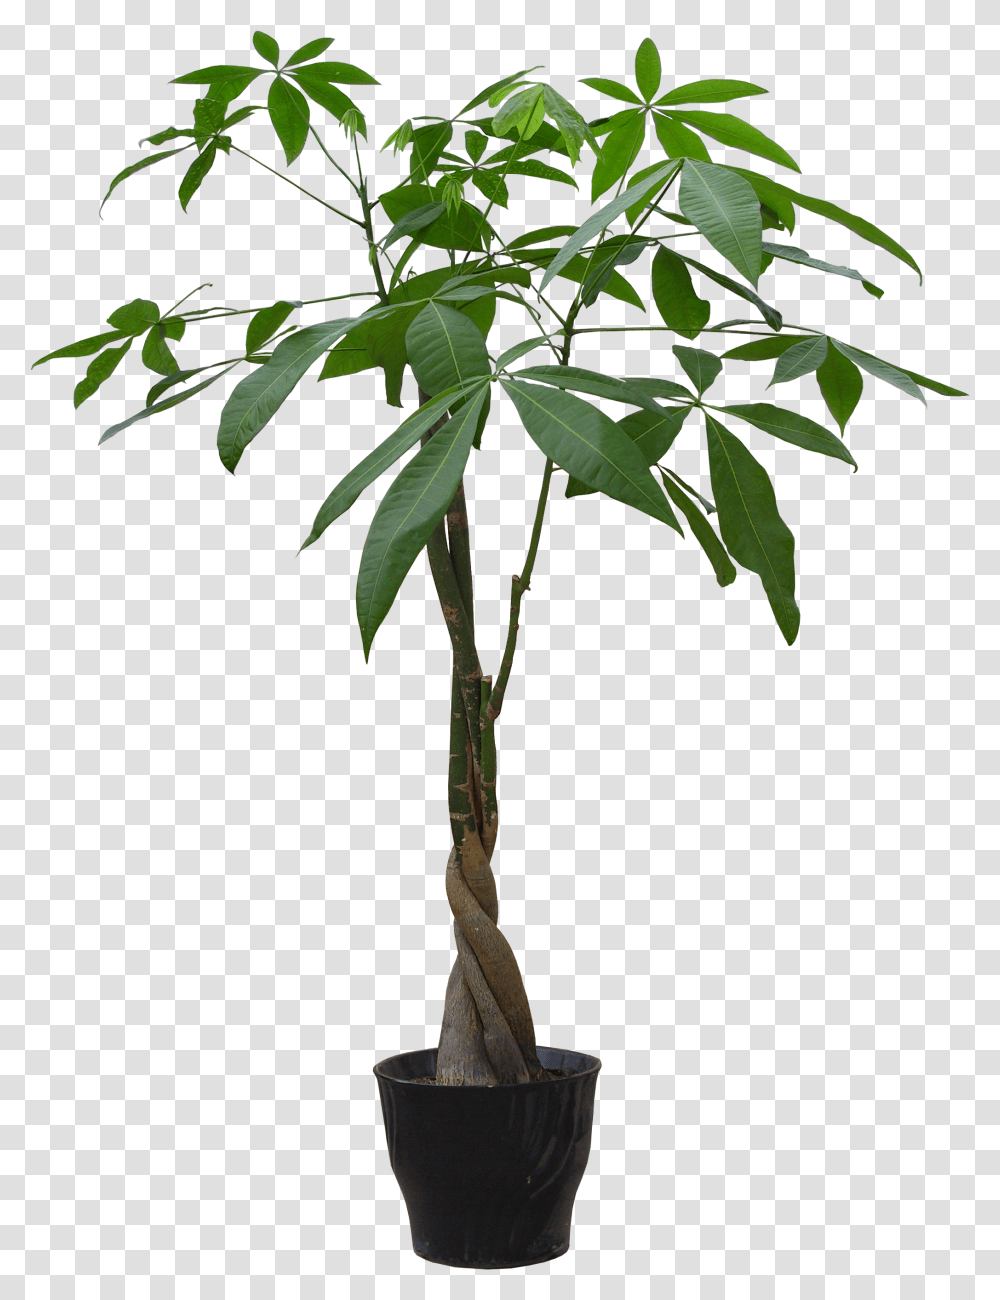 Houseplant Flowerpot Guiana Chestnut Plant In Pot, Tree, Leaf, Palm Tree, Arecaceae Transparent Png